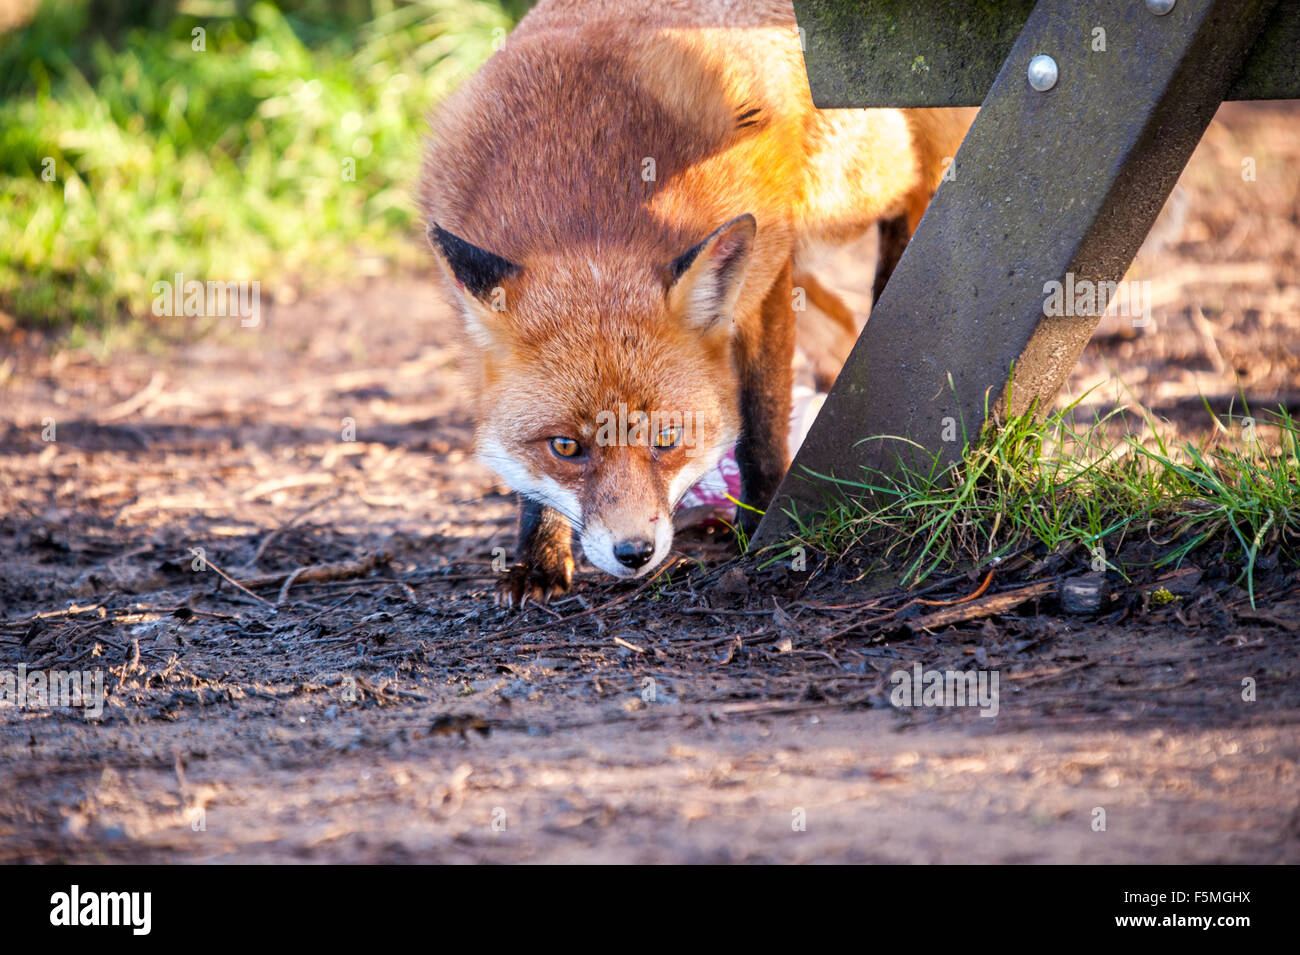 Fox under bench Stock Photo